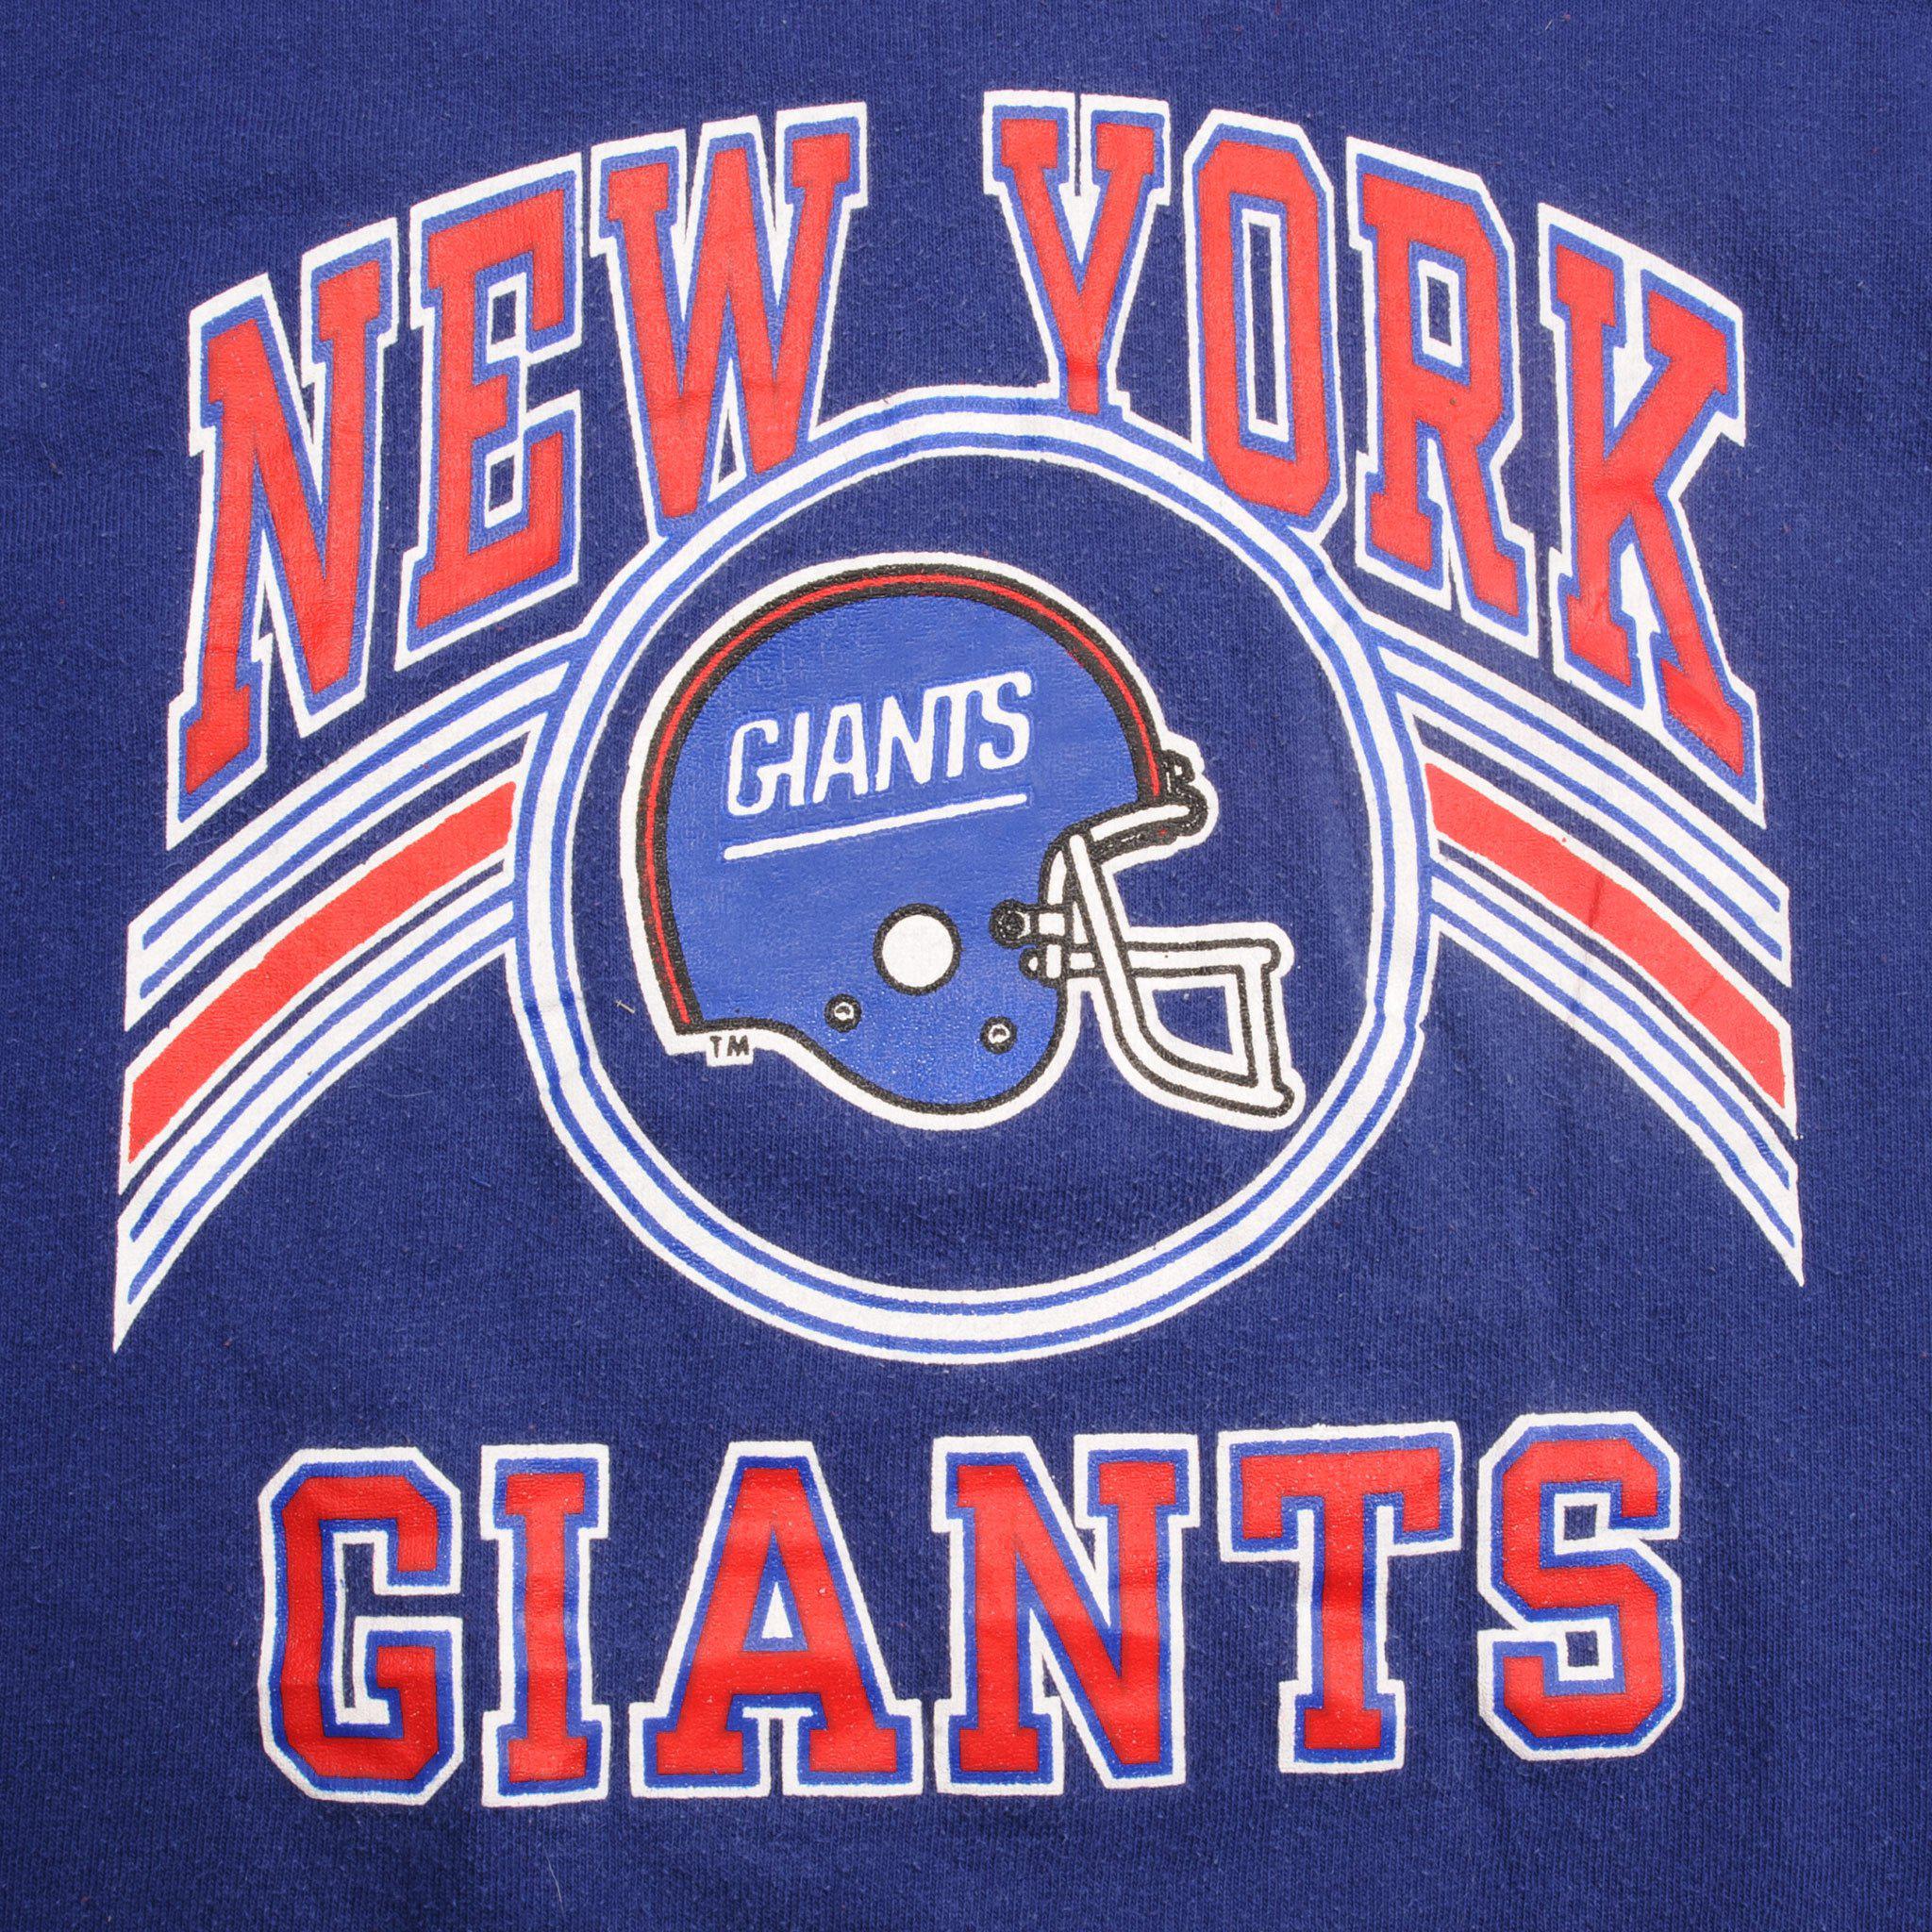 Mitchell & Ness Gray NY Giants 1954 Champs Raglan 3/4 Sleeve T-Shirt